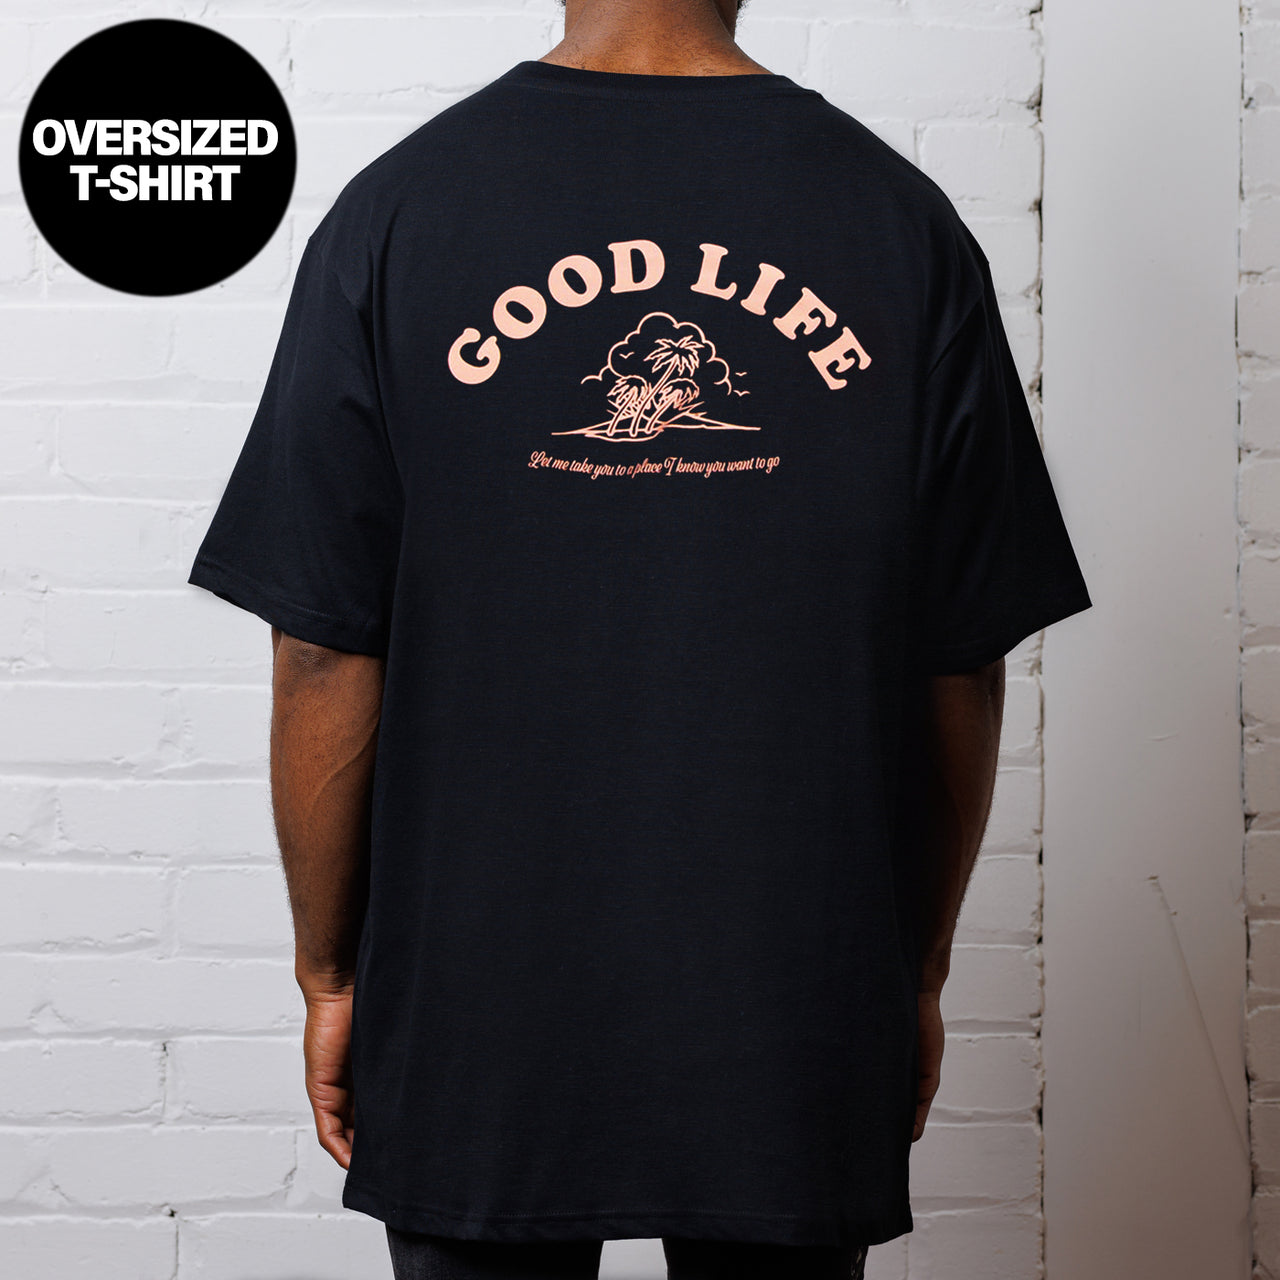 Good Life  - Oversized Tshirt - Black